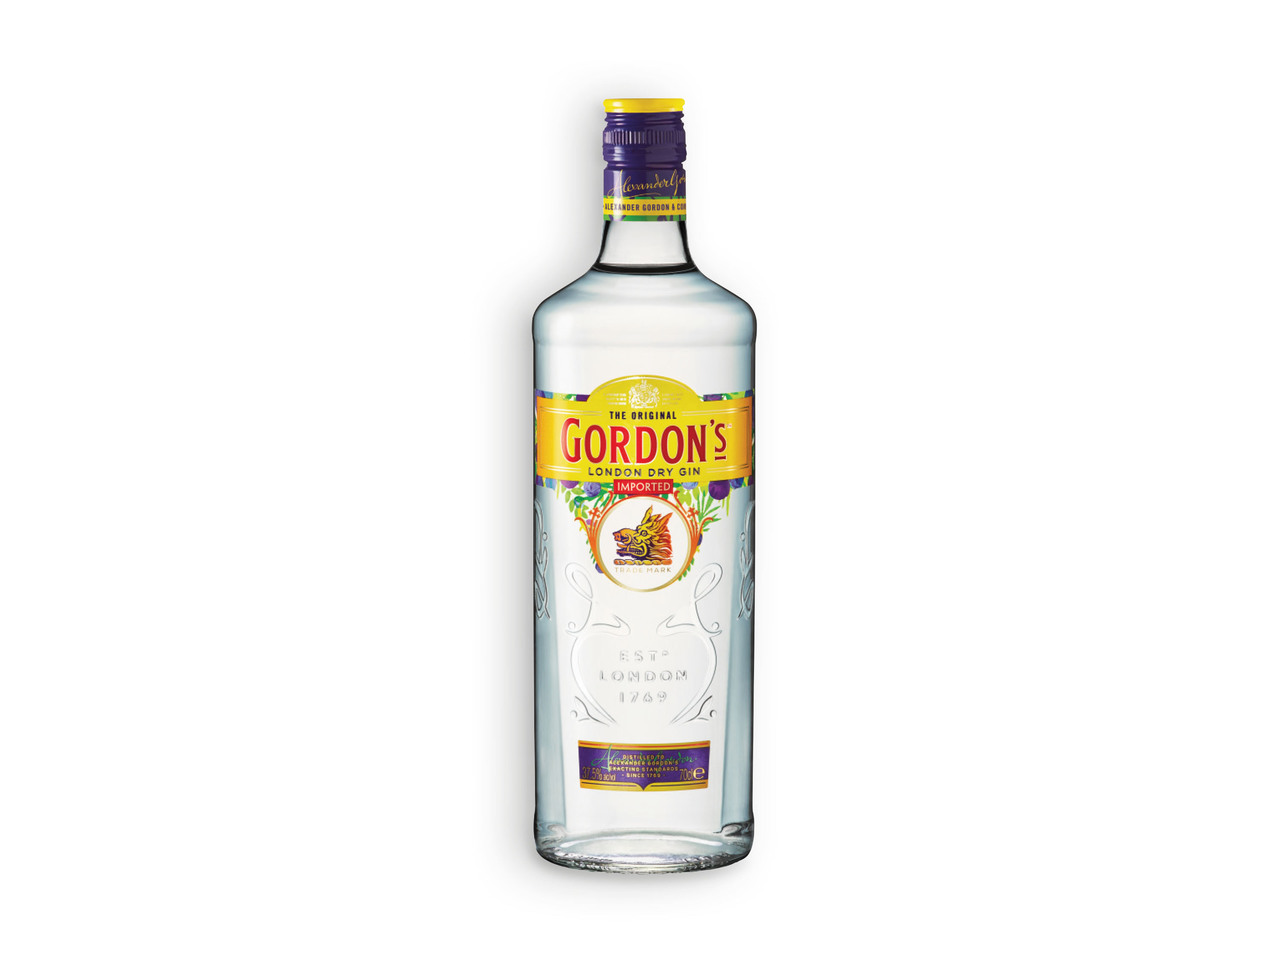 GORDON'S(R) London Dry Gin